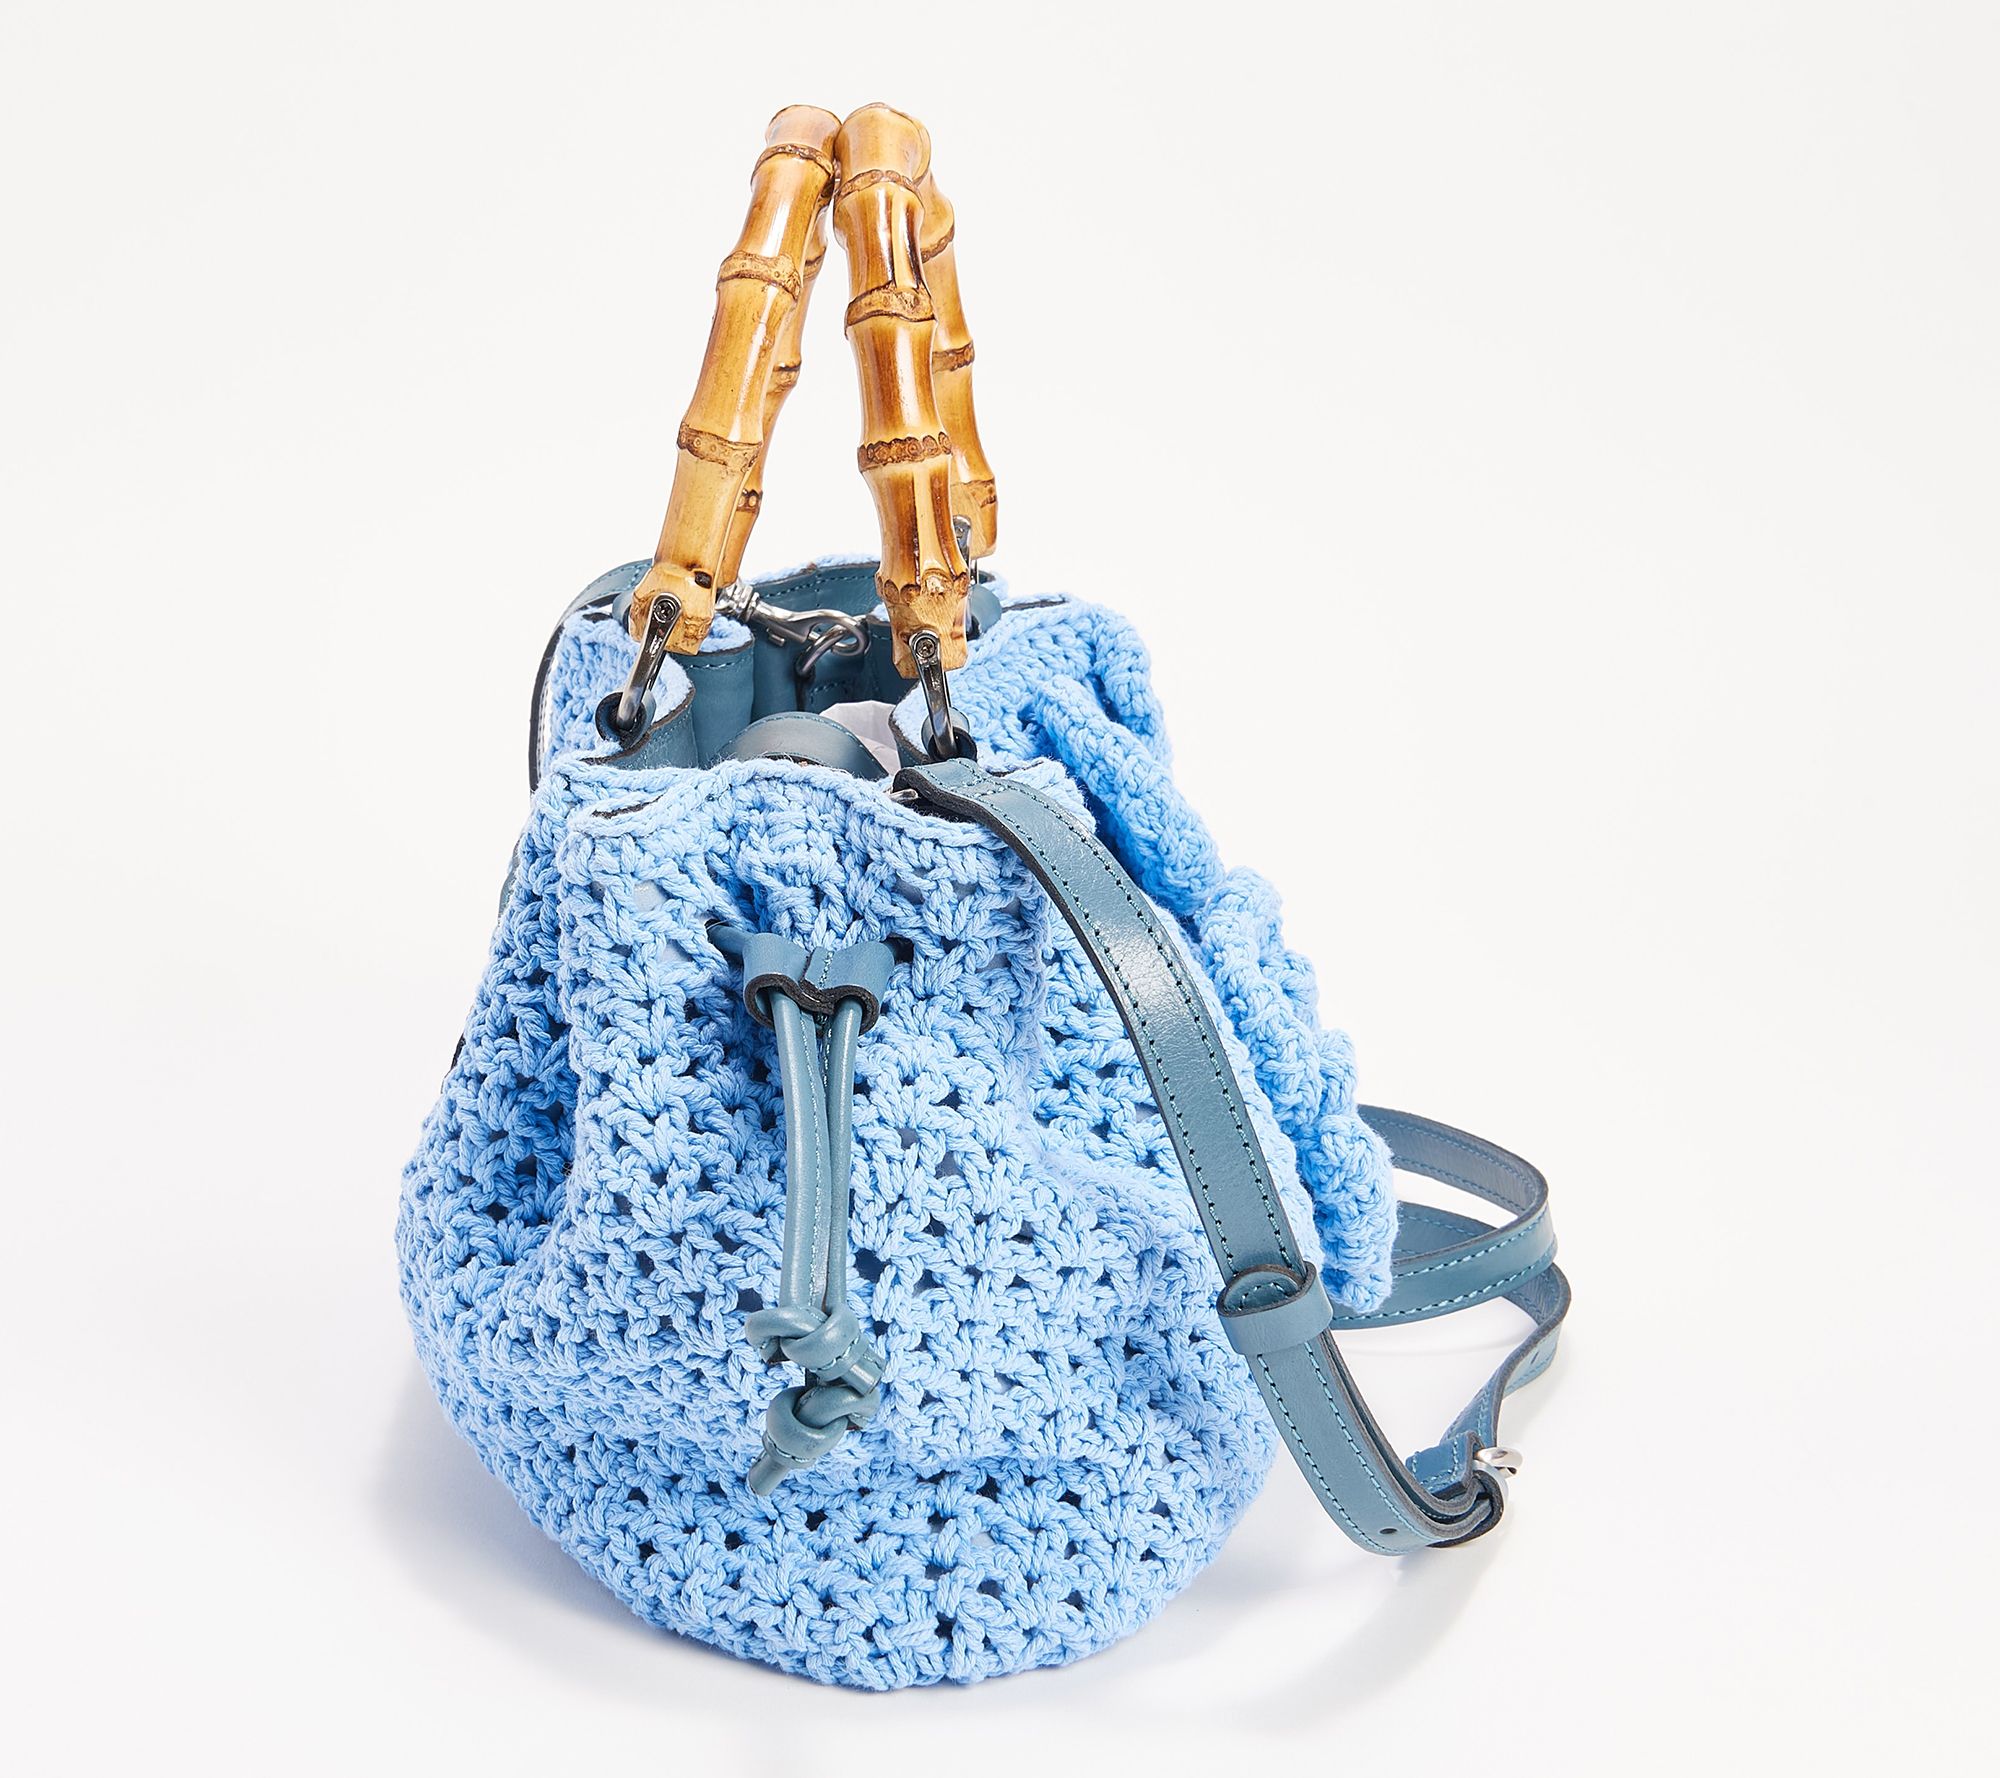 Crochet Bags - A Top Handbag Trend – Patricia Nash